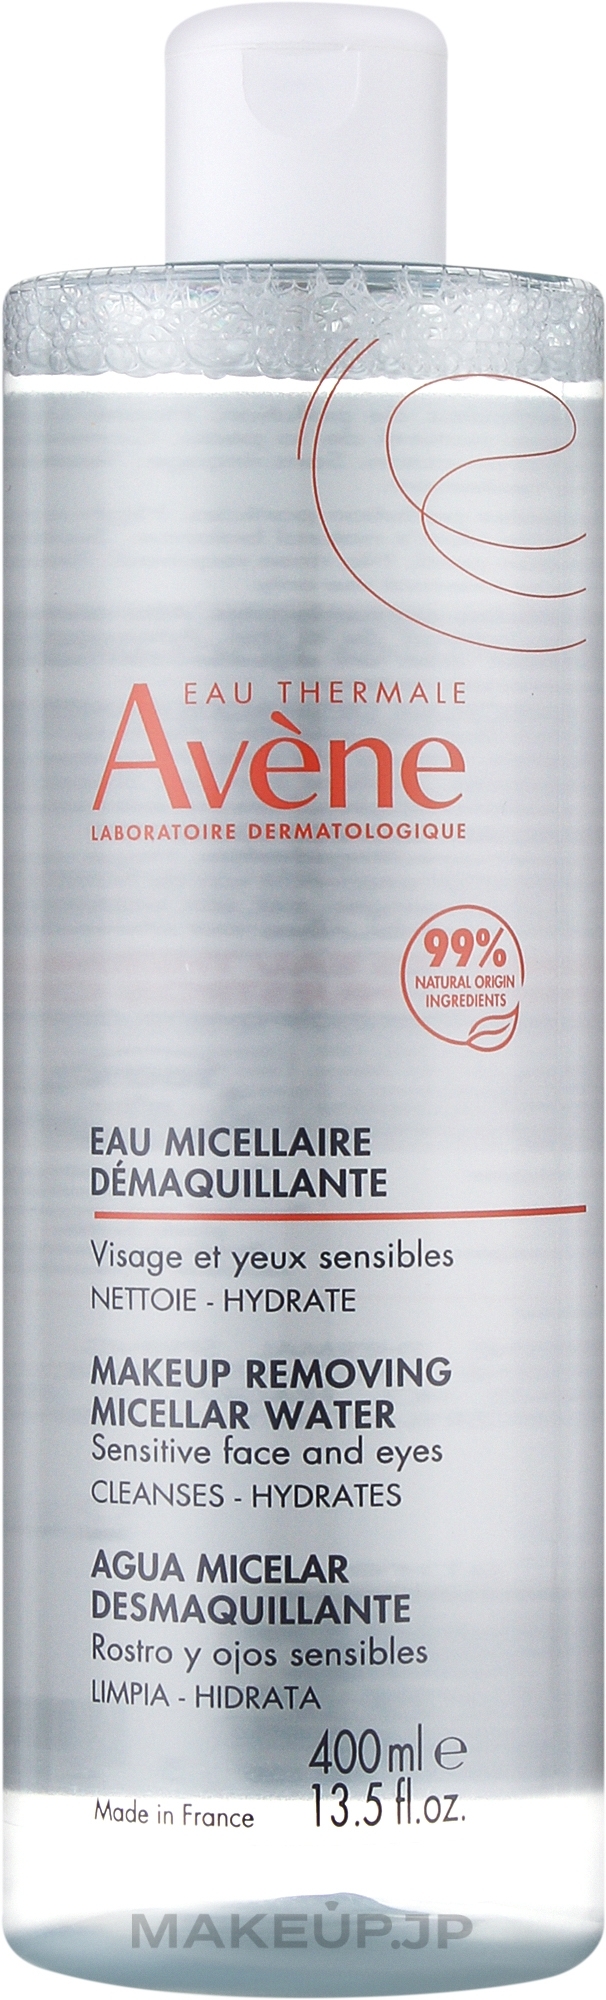 Micellar Water - Avene Les Essentiels Makeup Removing Micellar Water — photo 400 ml